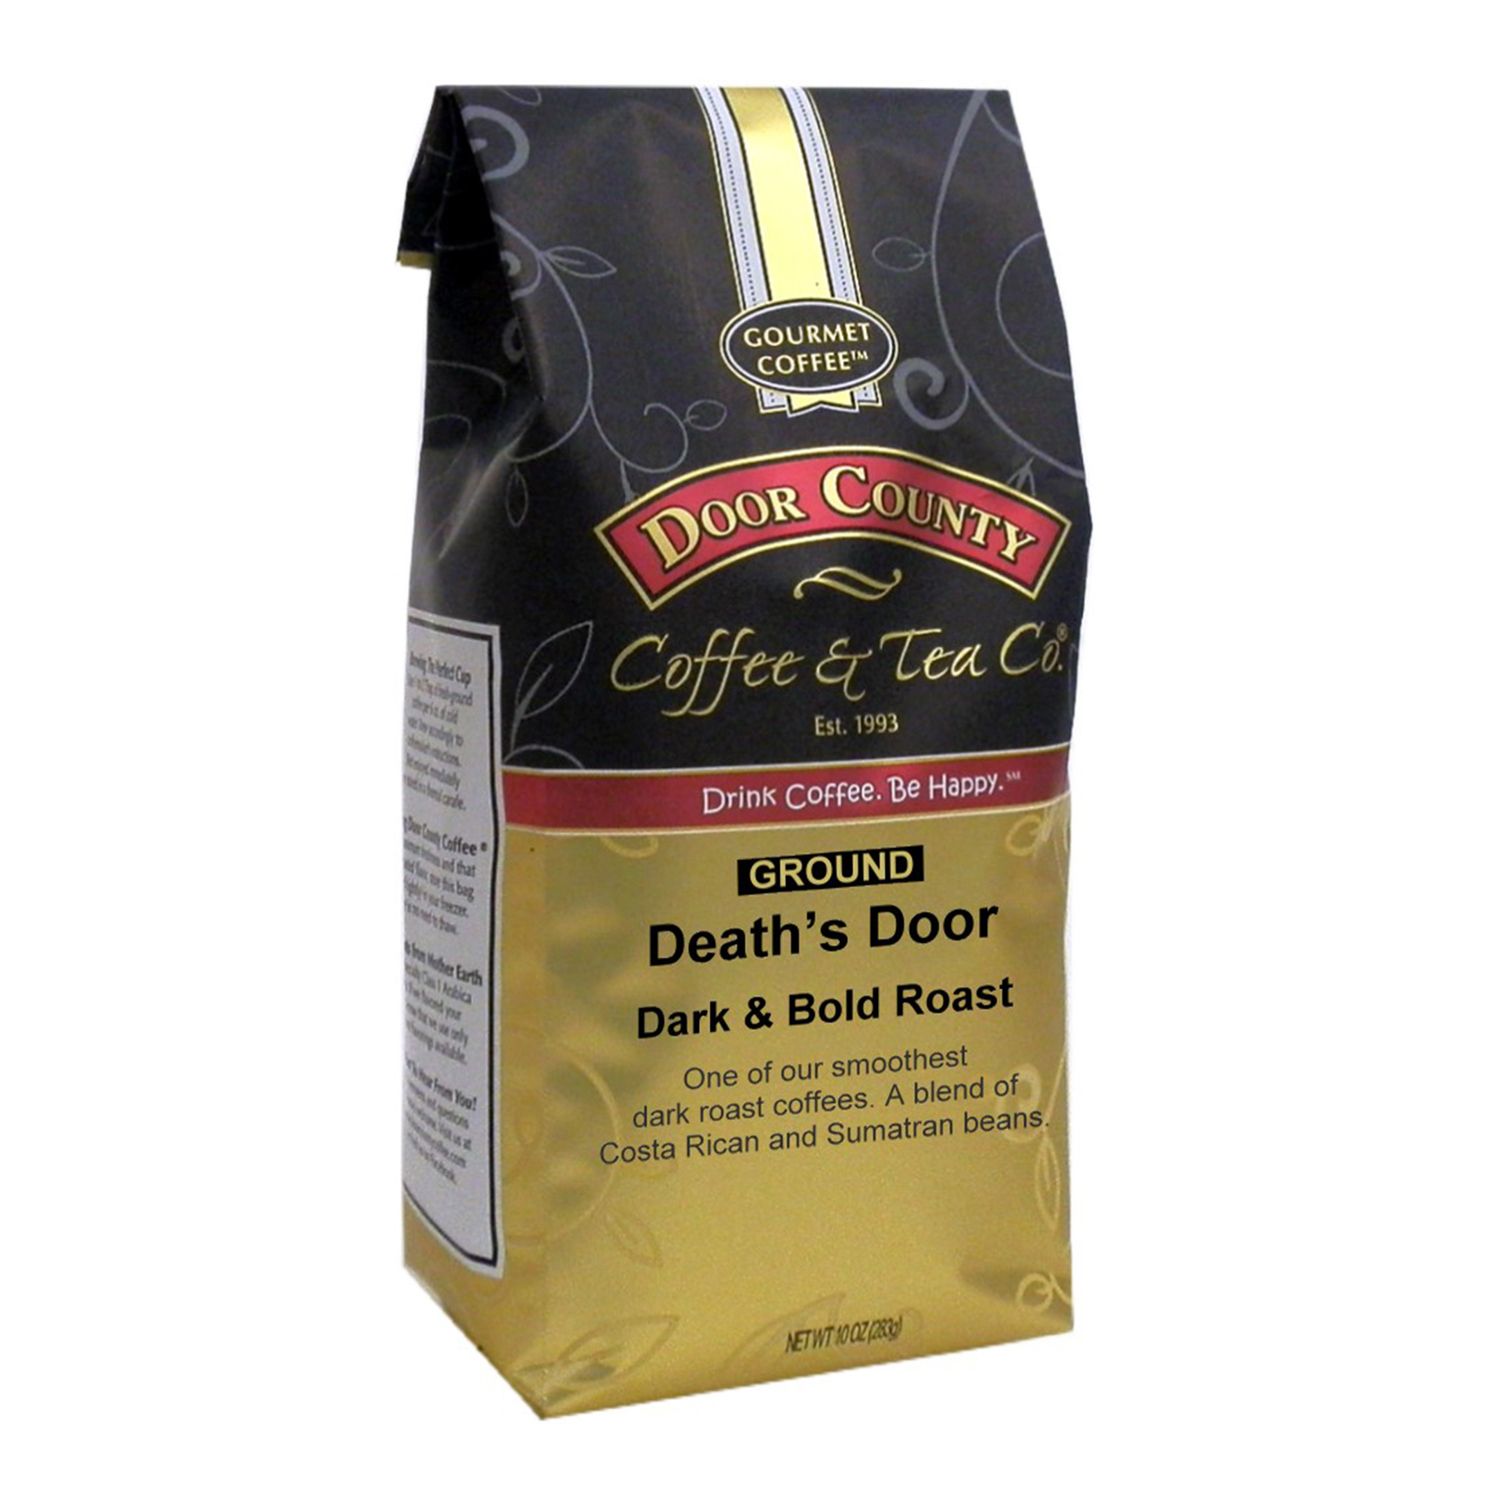 Image for Door County Coffee & Tea Co. Death's Door, Costa Rica, Sumatra & Colombia Specialty Ground Coffee, Medium Roast, 10-oz. at Kohl's.